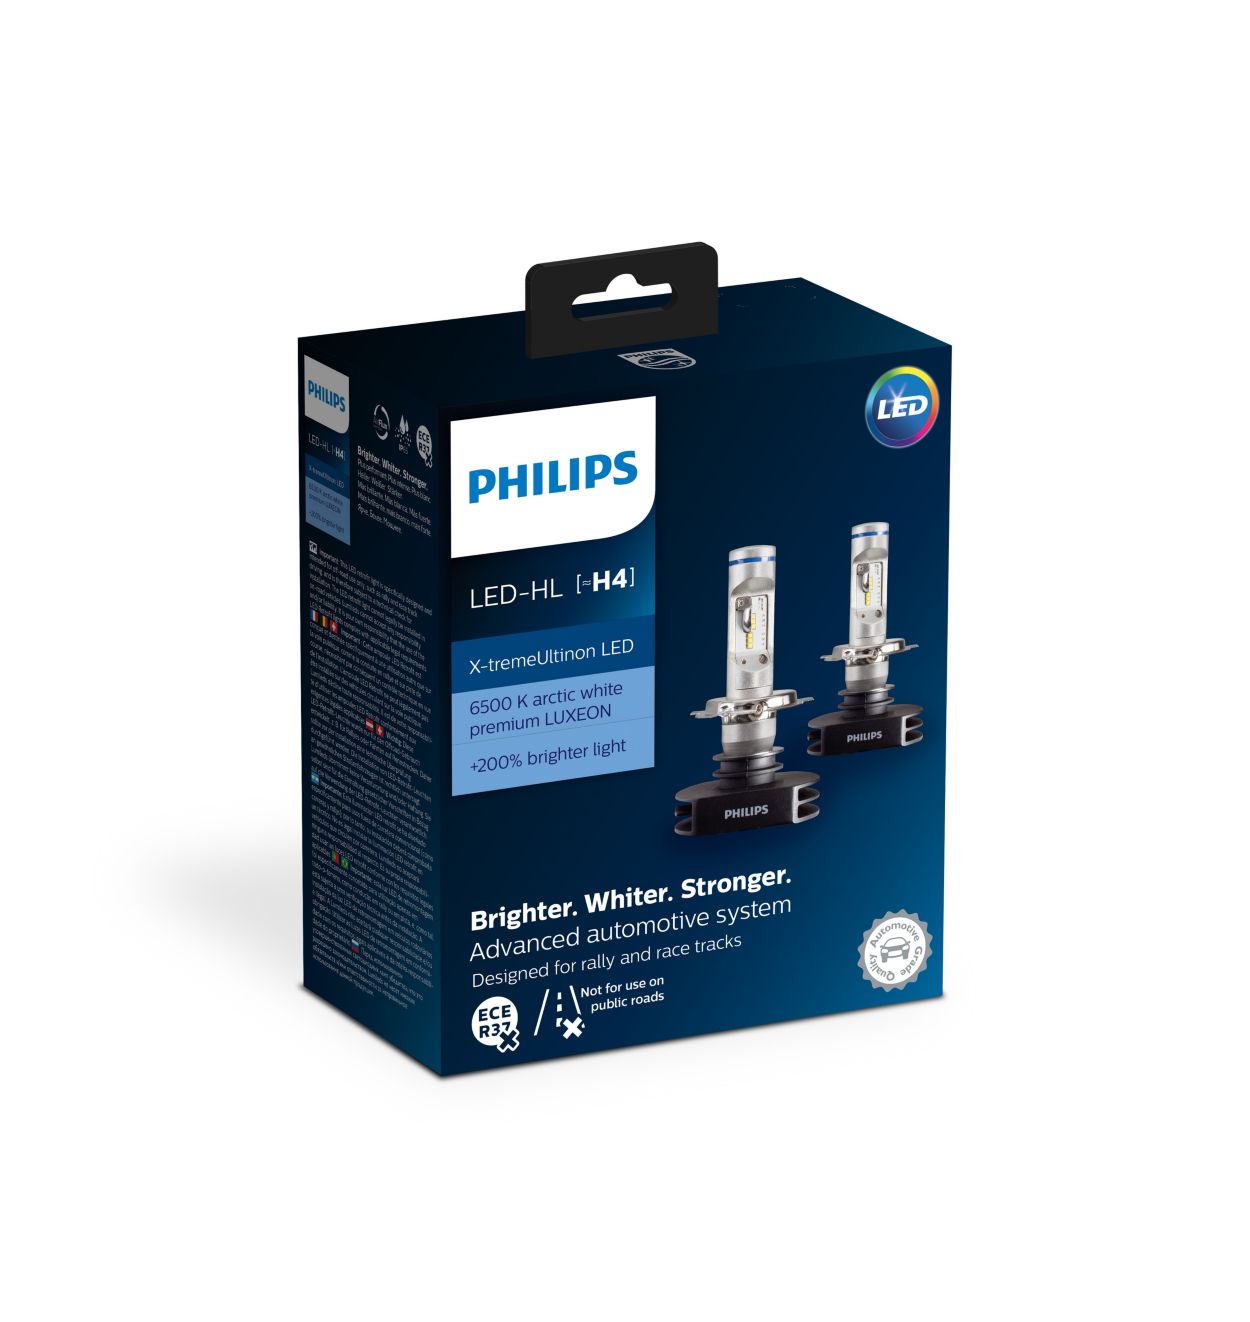 Светодиодные филипс купить. Philips x-treme Ultinon led h4. Led лампы h4 Philips x-treme Ultinon. Светодиодные лампы h4 Philips Ultinon. Hb4 Philips led.